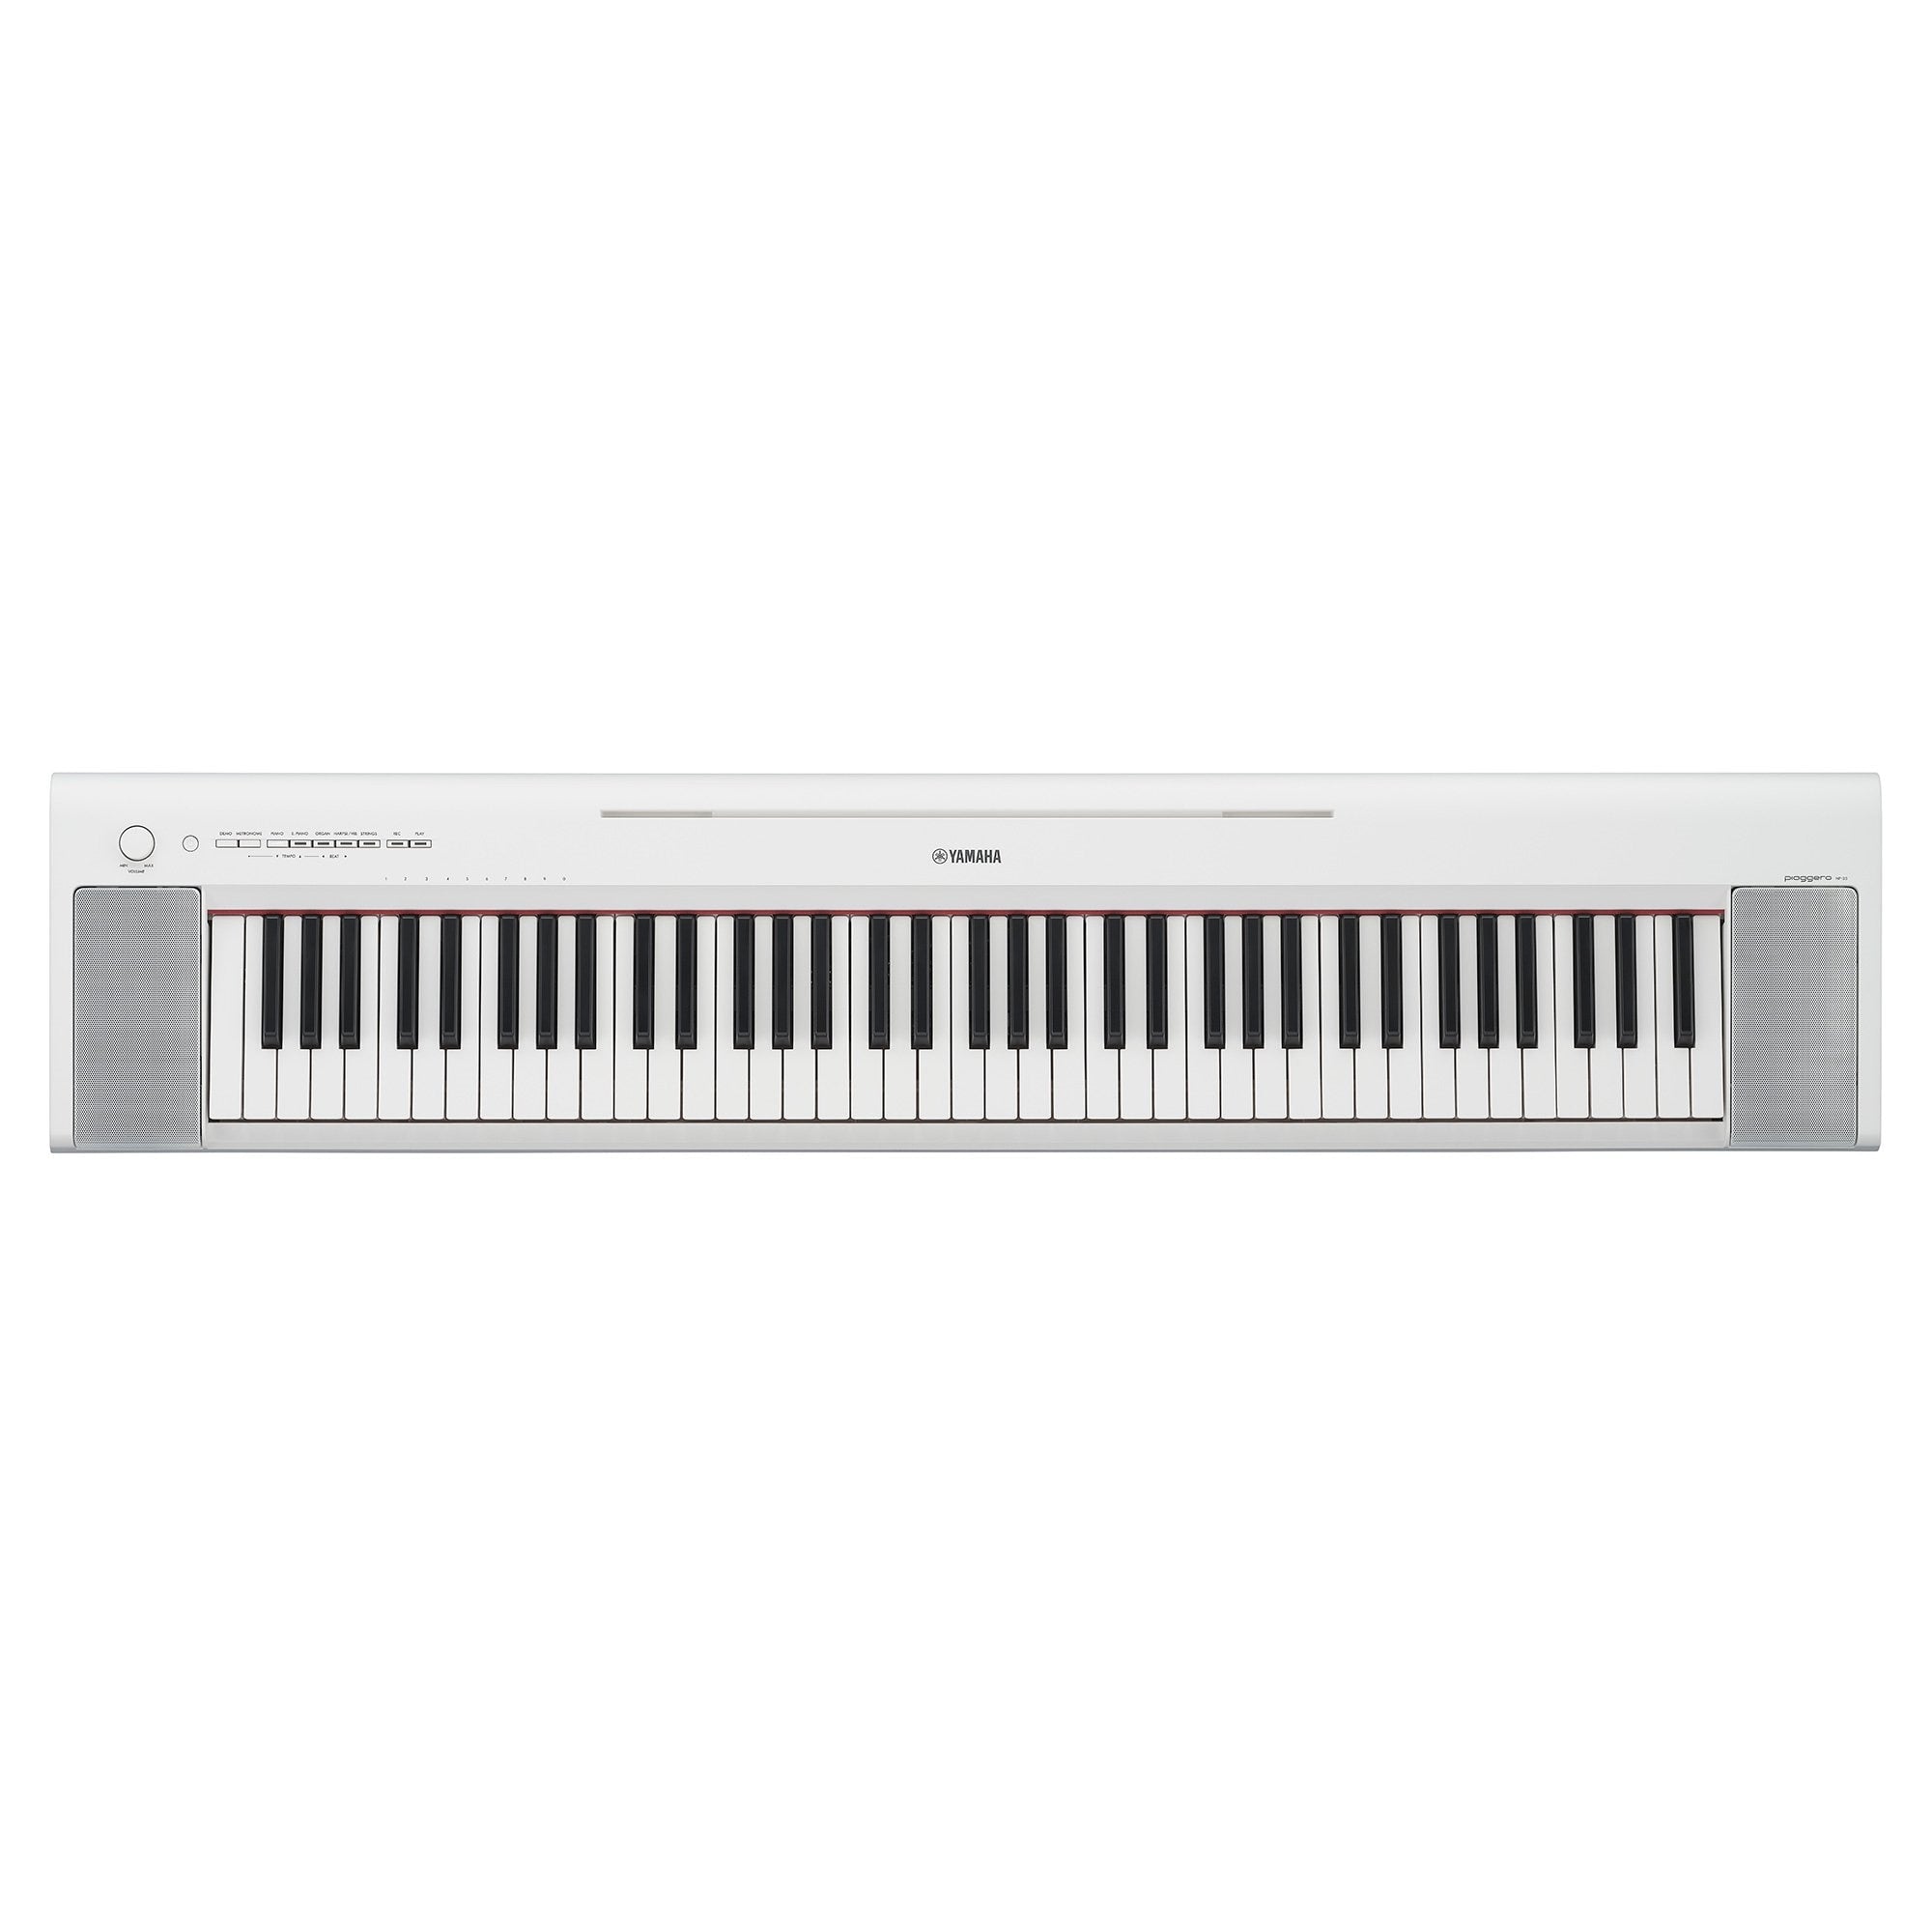 Yamaha Piaggero NP-35 76 Key Portable Piano